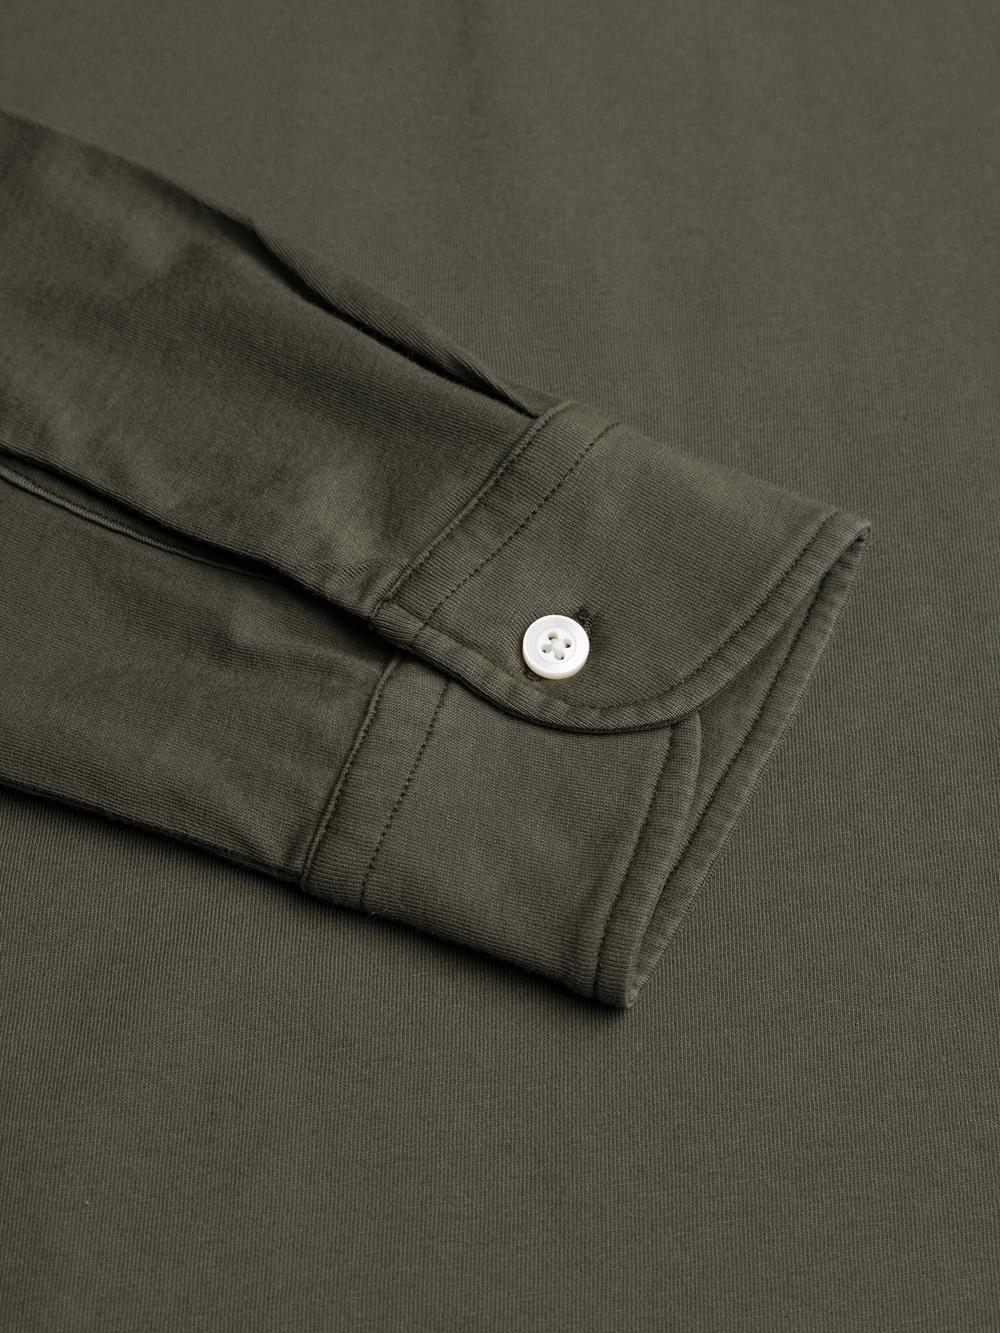 Polo Bred Langarm aus khakifarbenem Jersey 